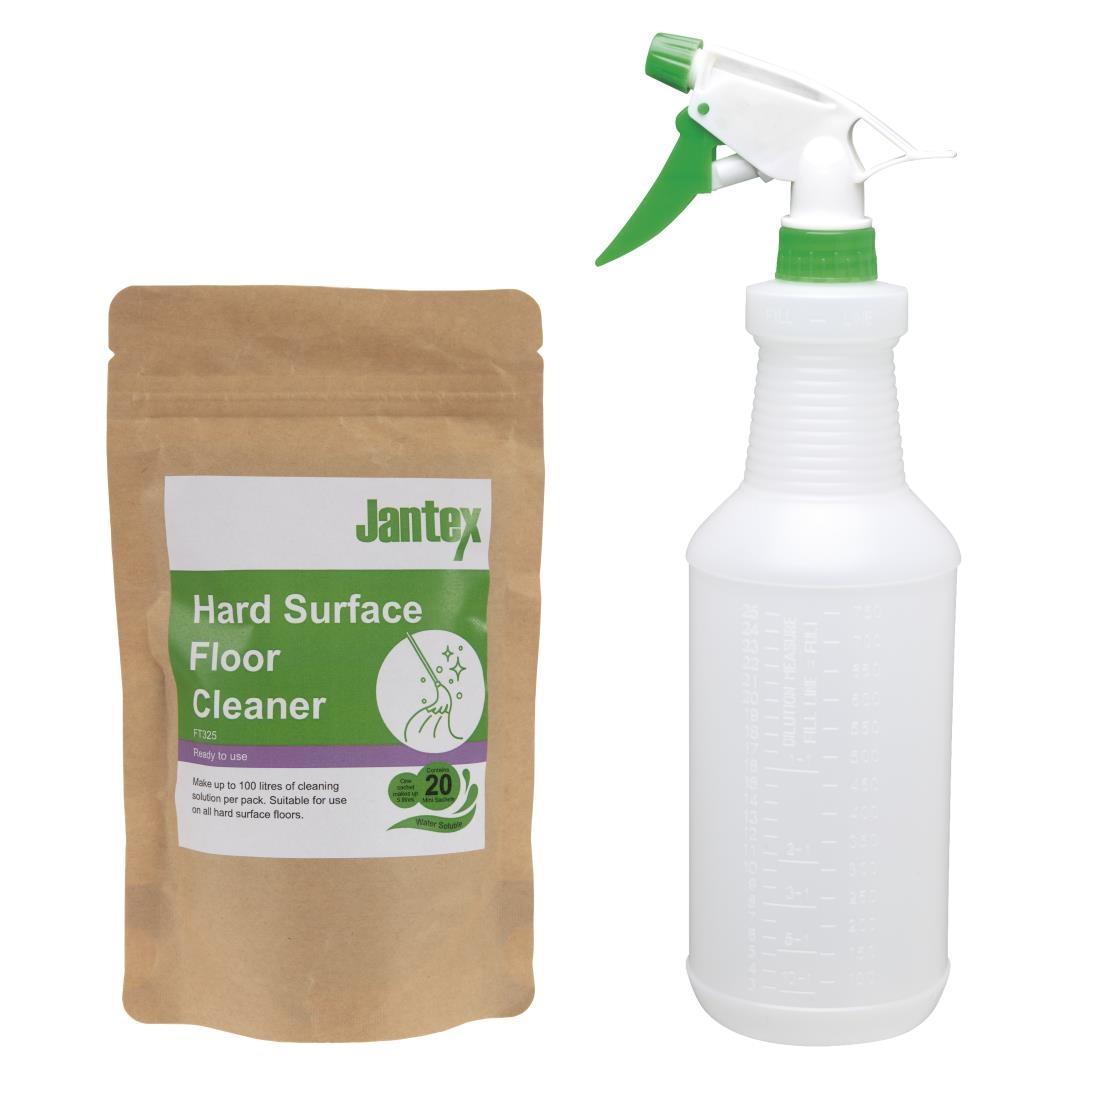 Jantex Green Hard Surface Floor Cleaner Sachets (Pack of 20) - FT325  - 6